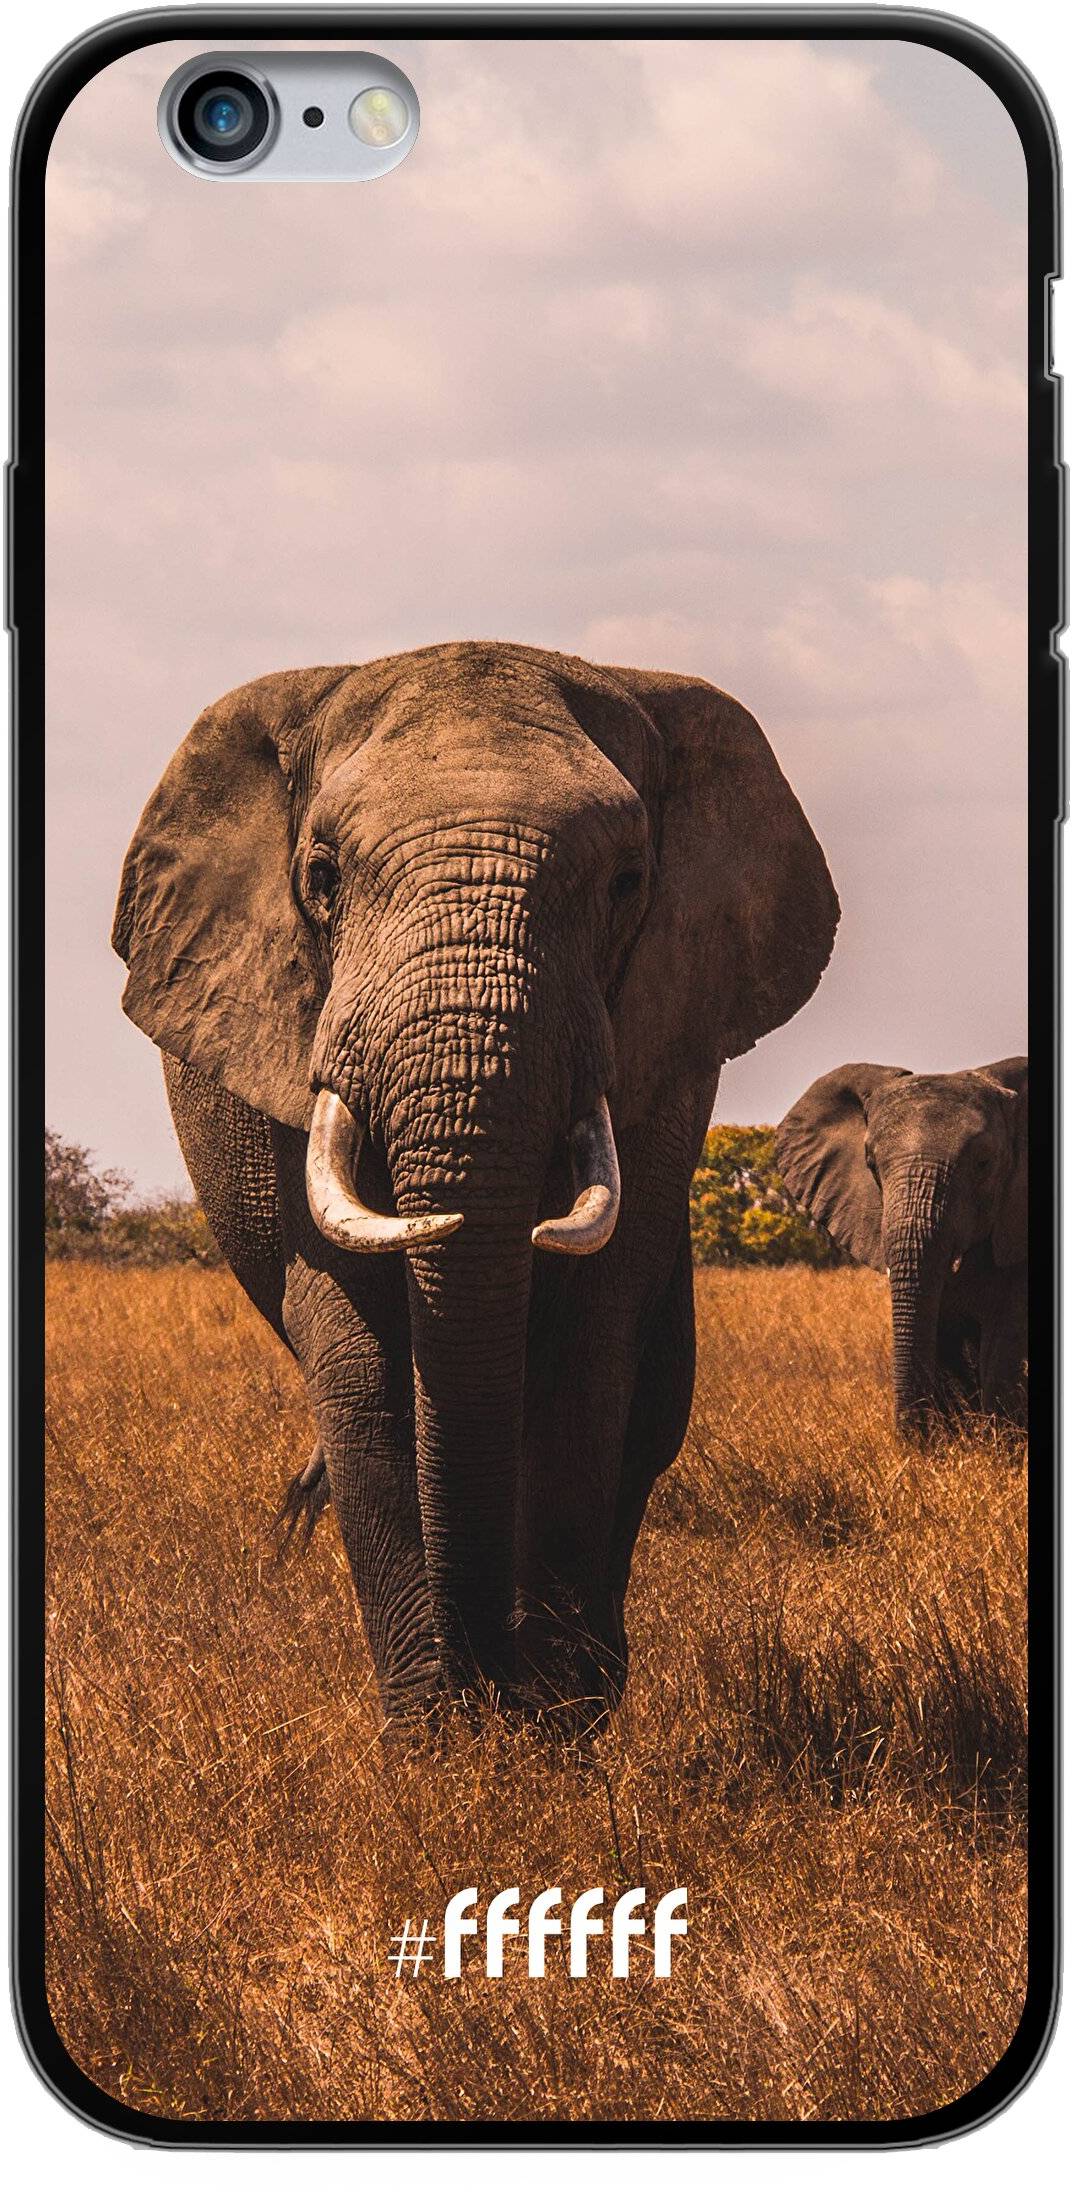 Elephants iPhone 6